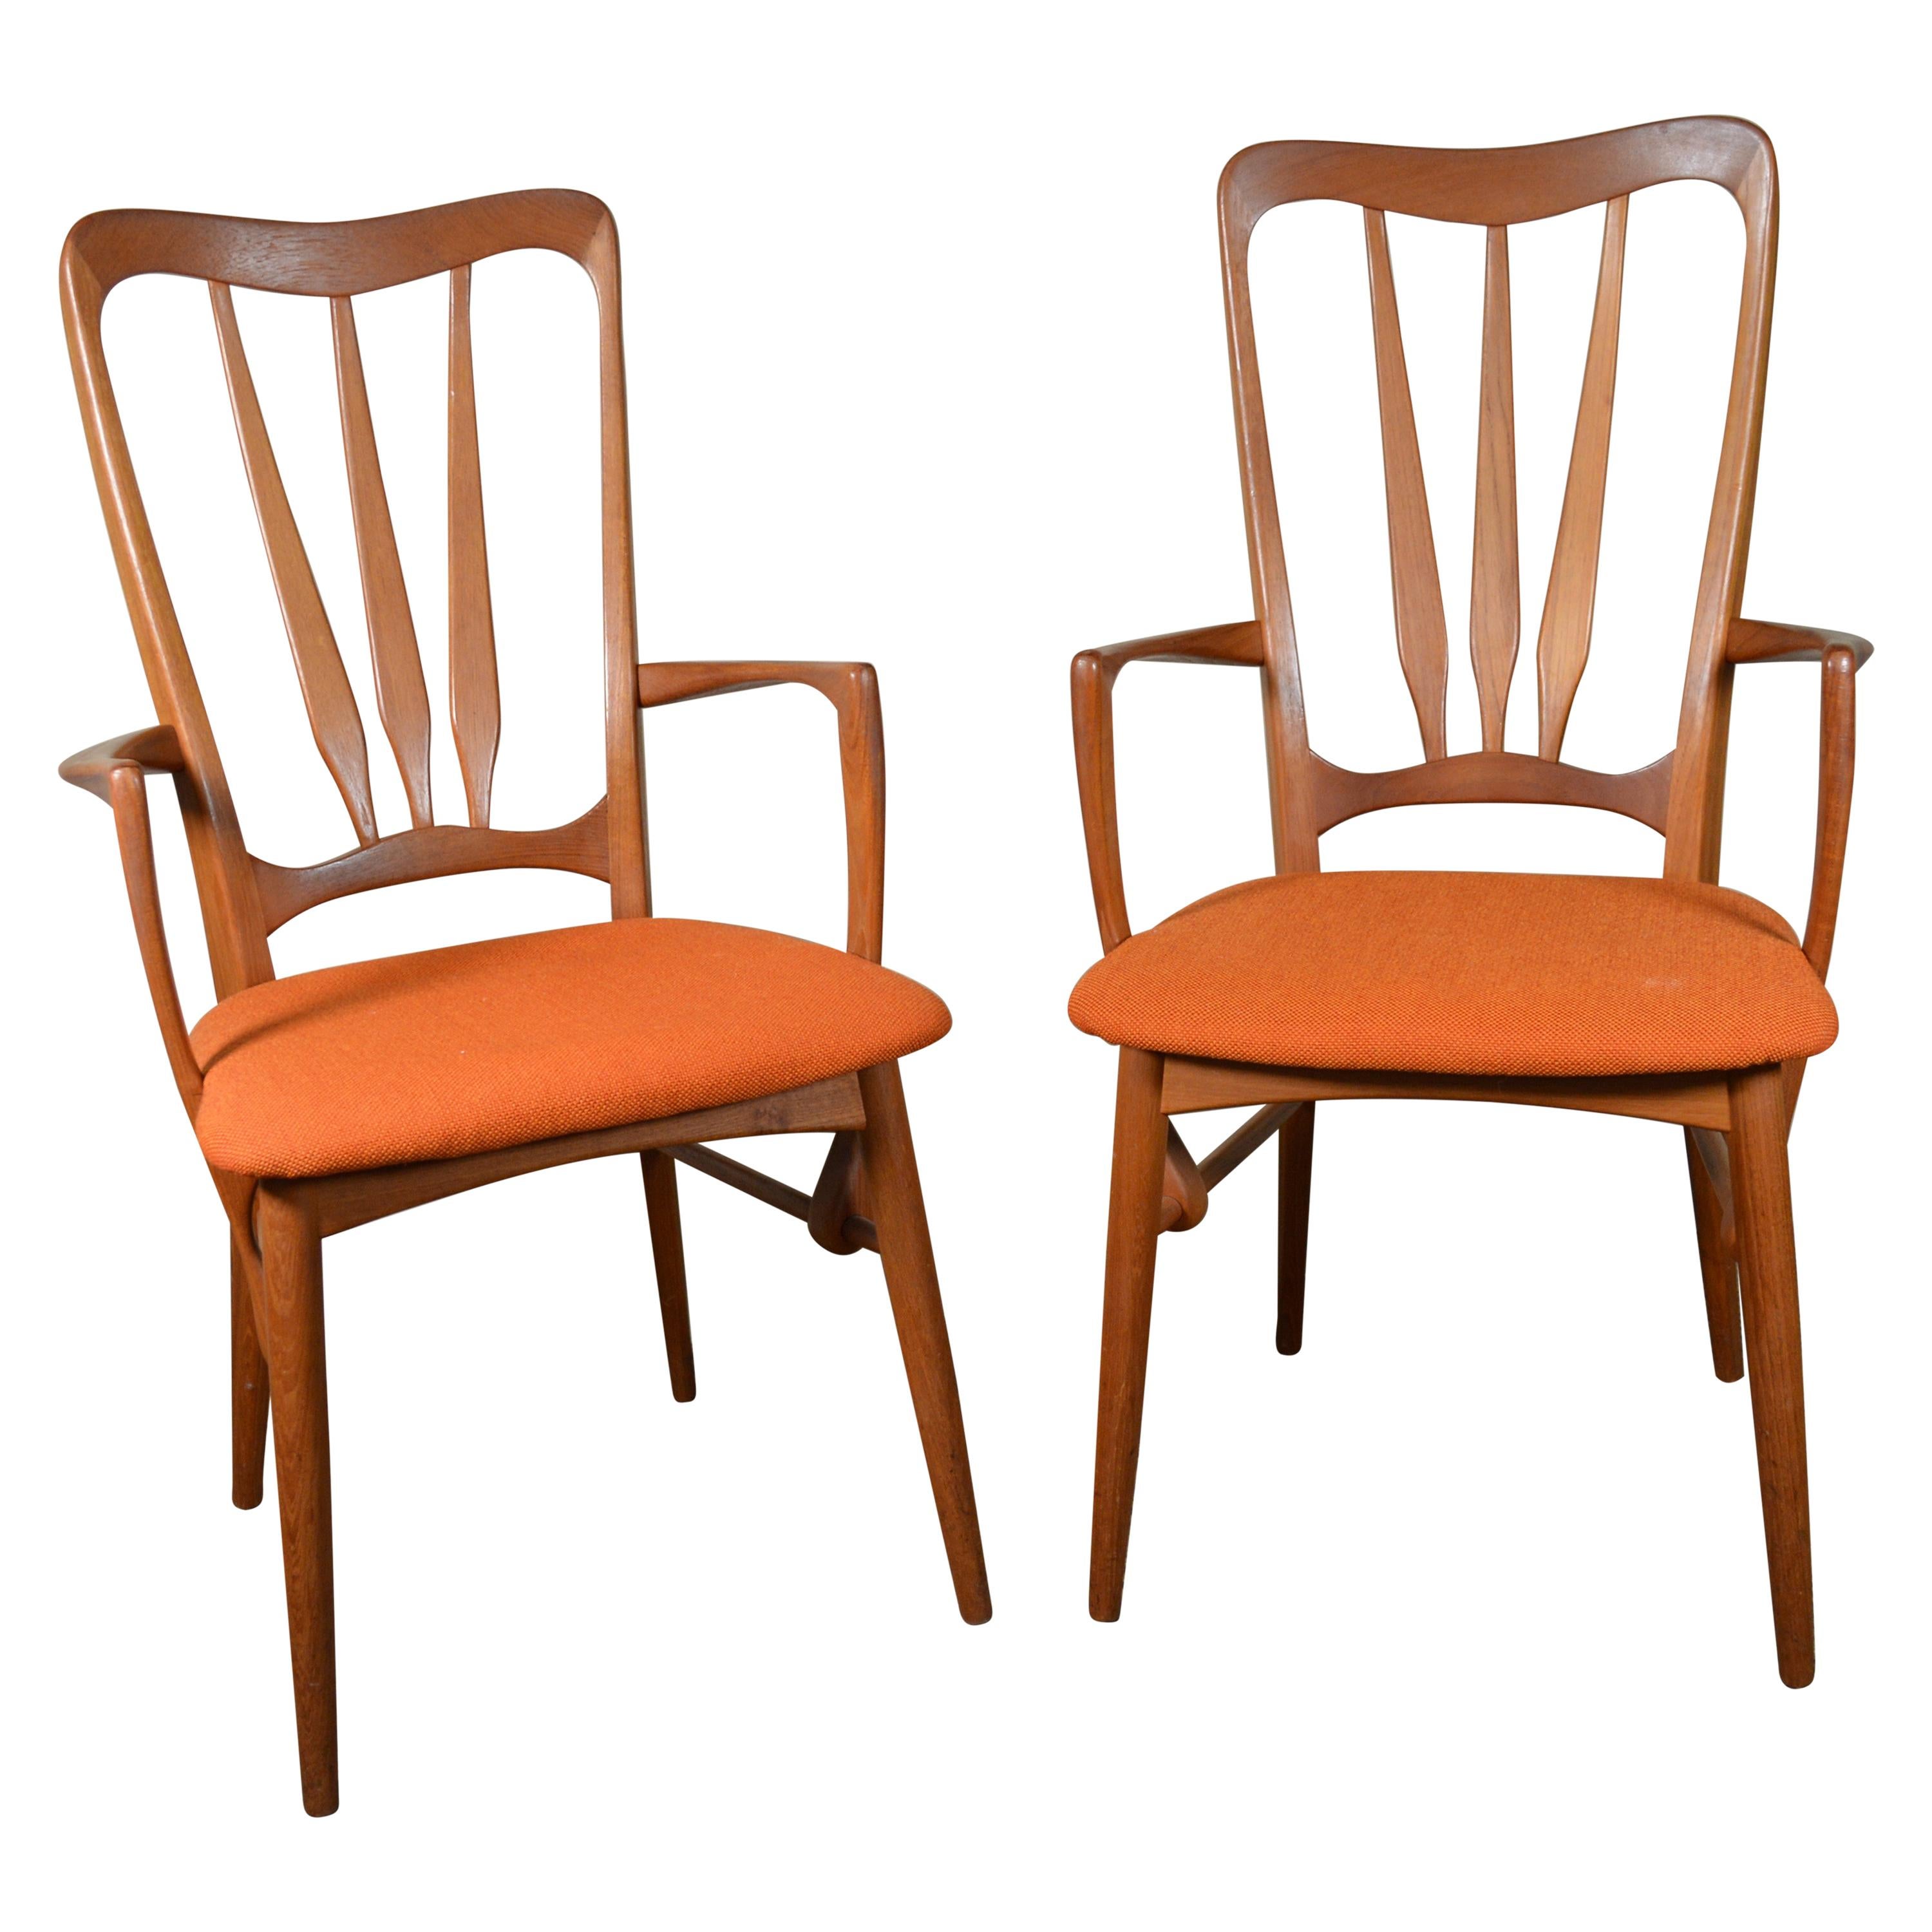 2 Midcentury Danish Modern Teak Dining Ingrid Chairs by Koefoeds Hornslet For Sale